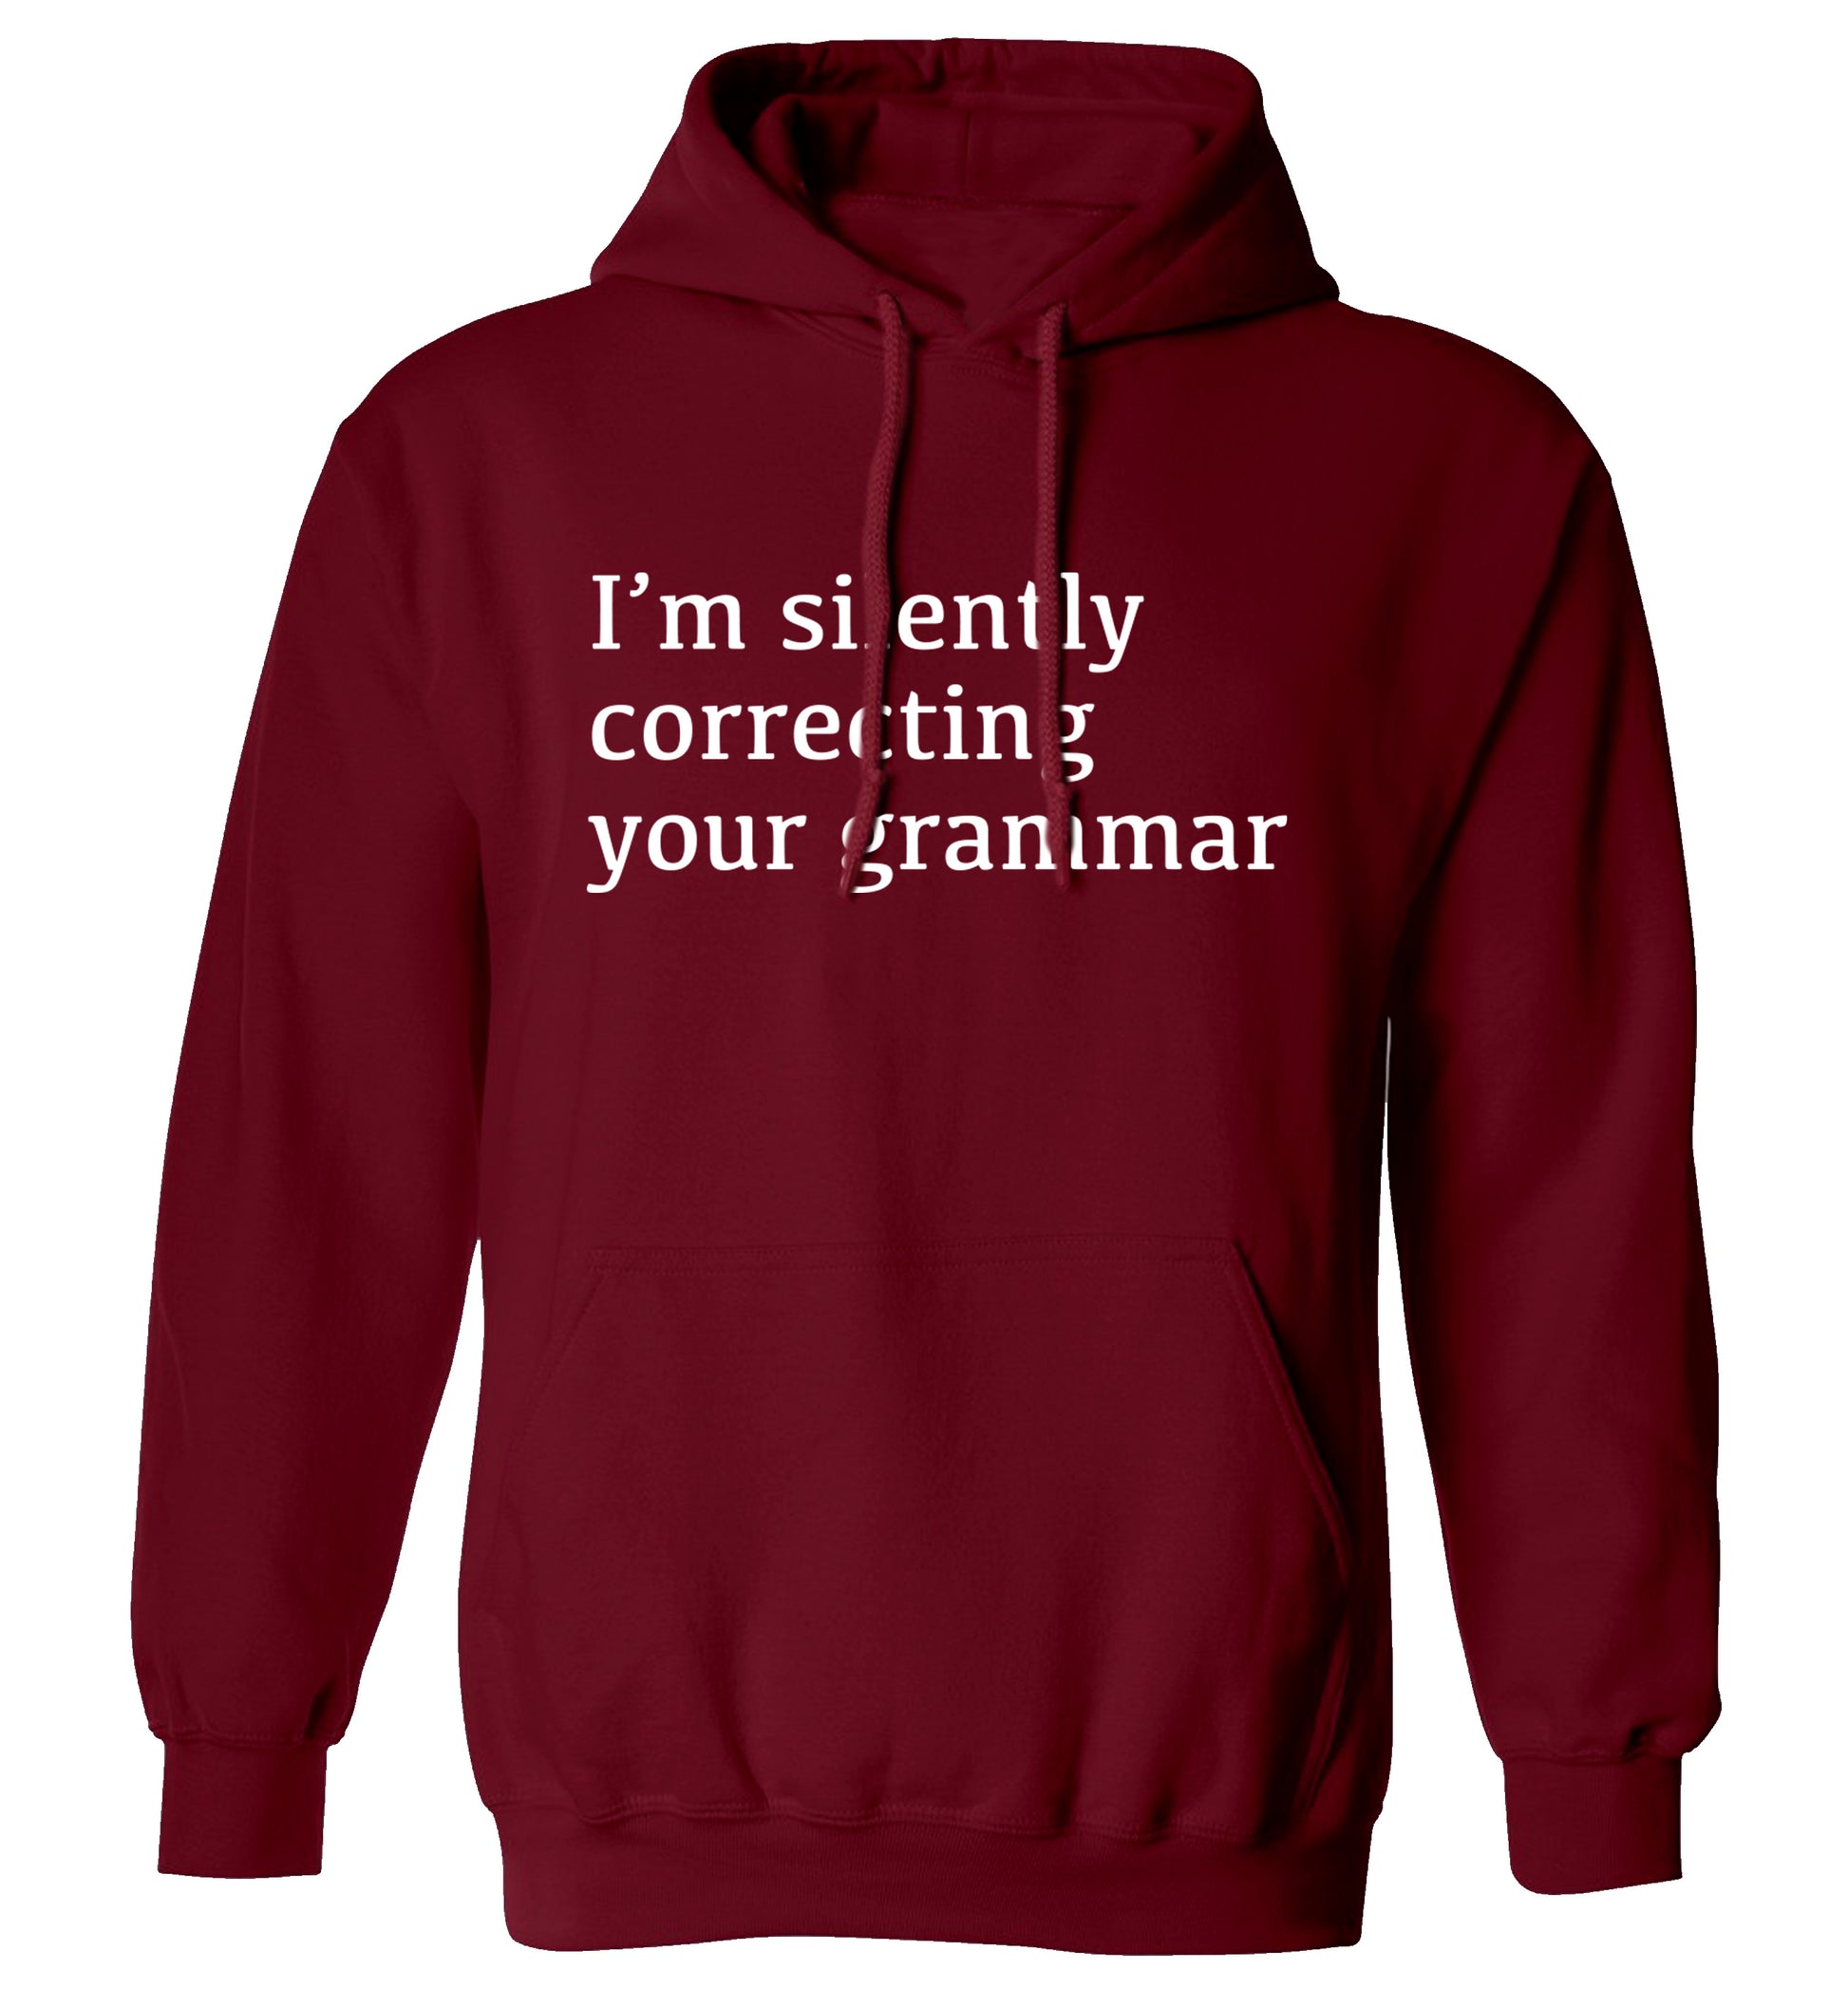 I'm silently correcting your grammar  adults unisex maroon hoodie 2XL